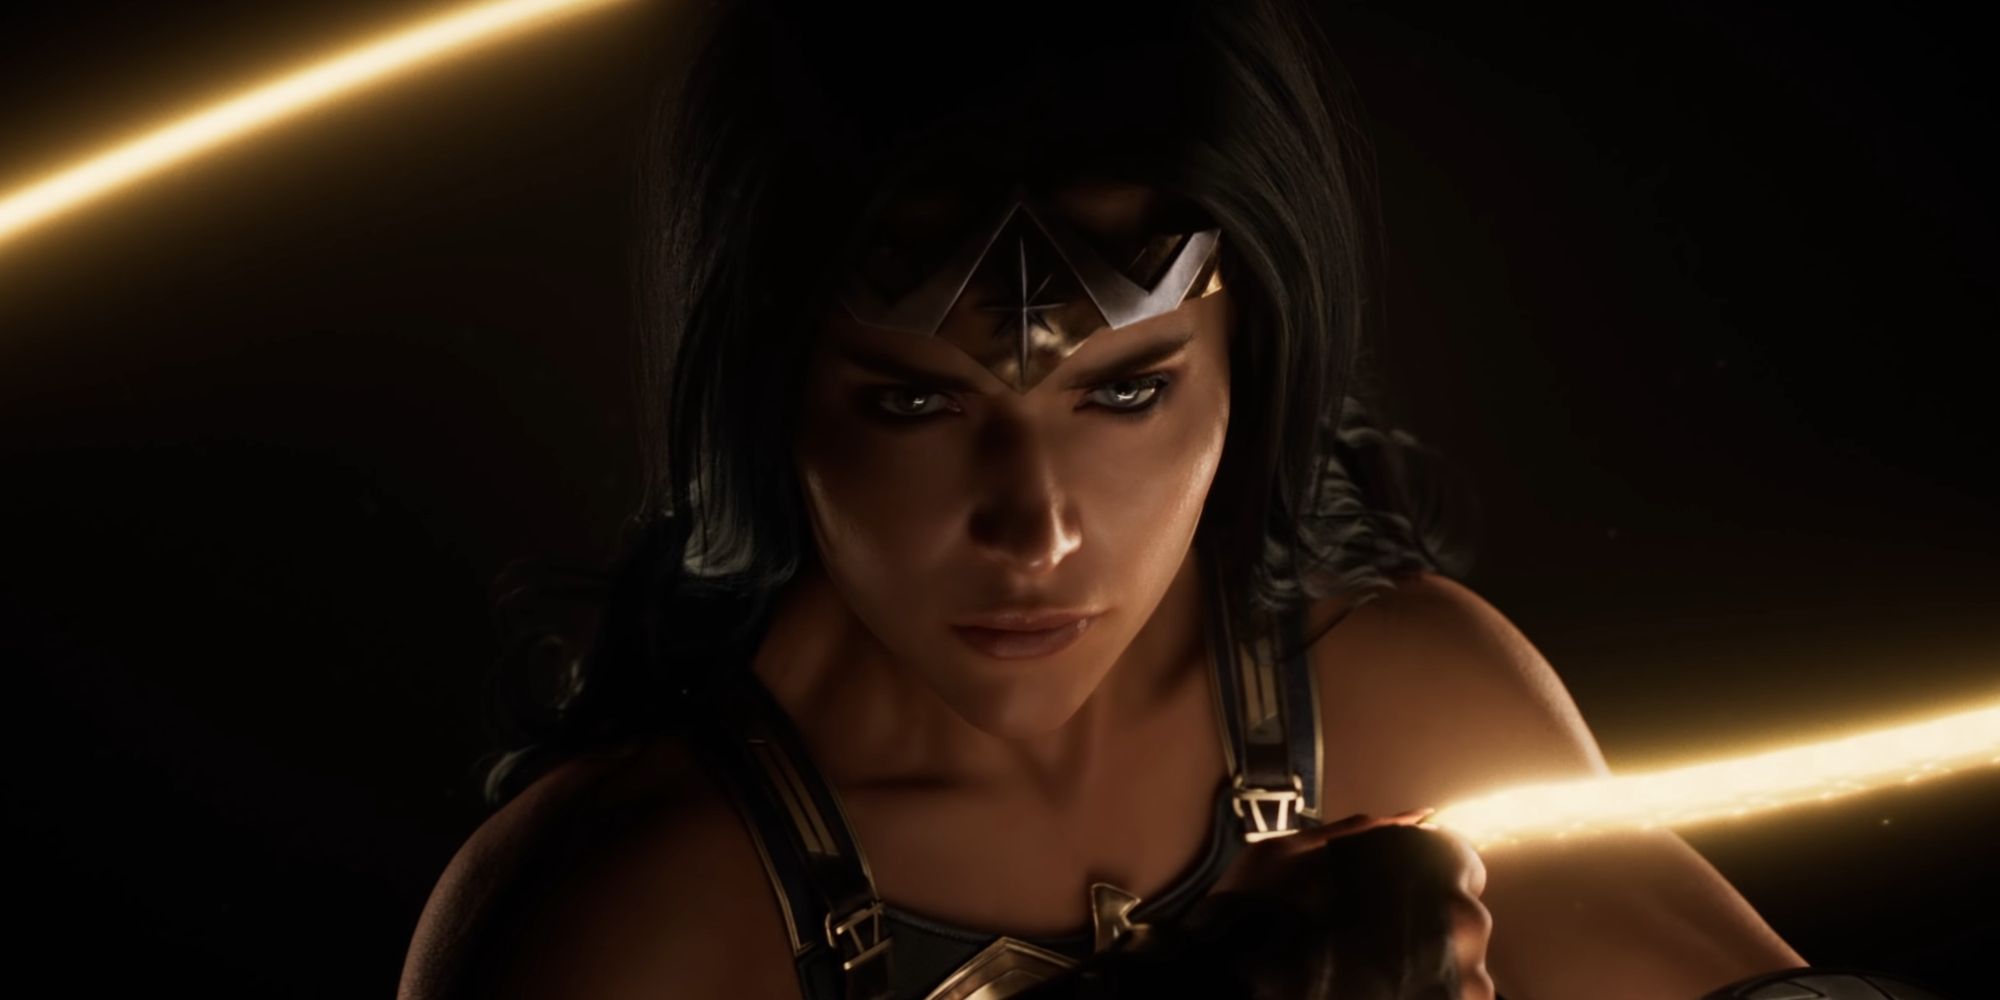 Wonder Woman wielding her lasso in the Wonder Woman game trailer